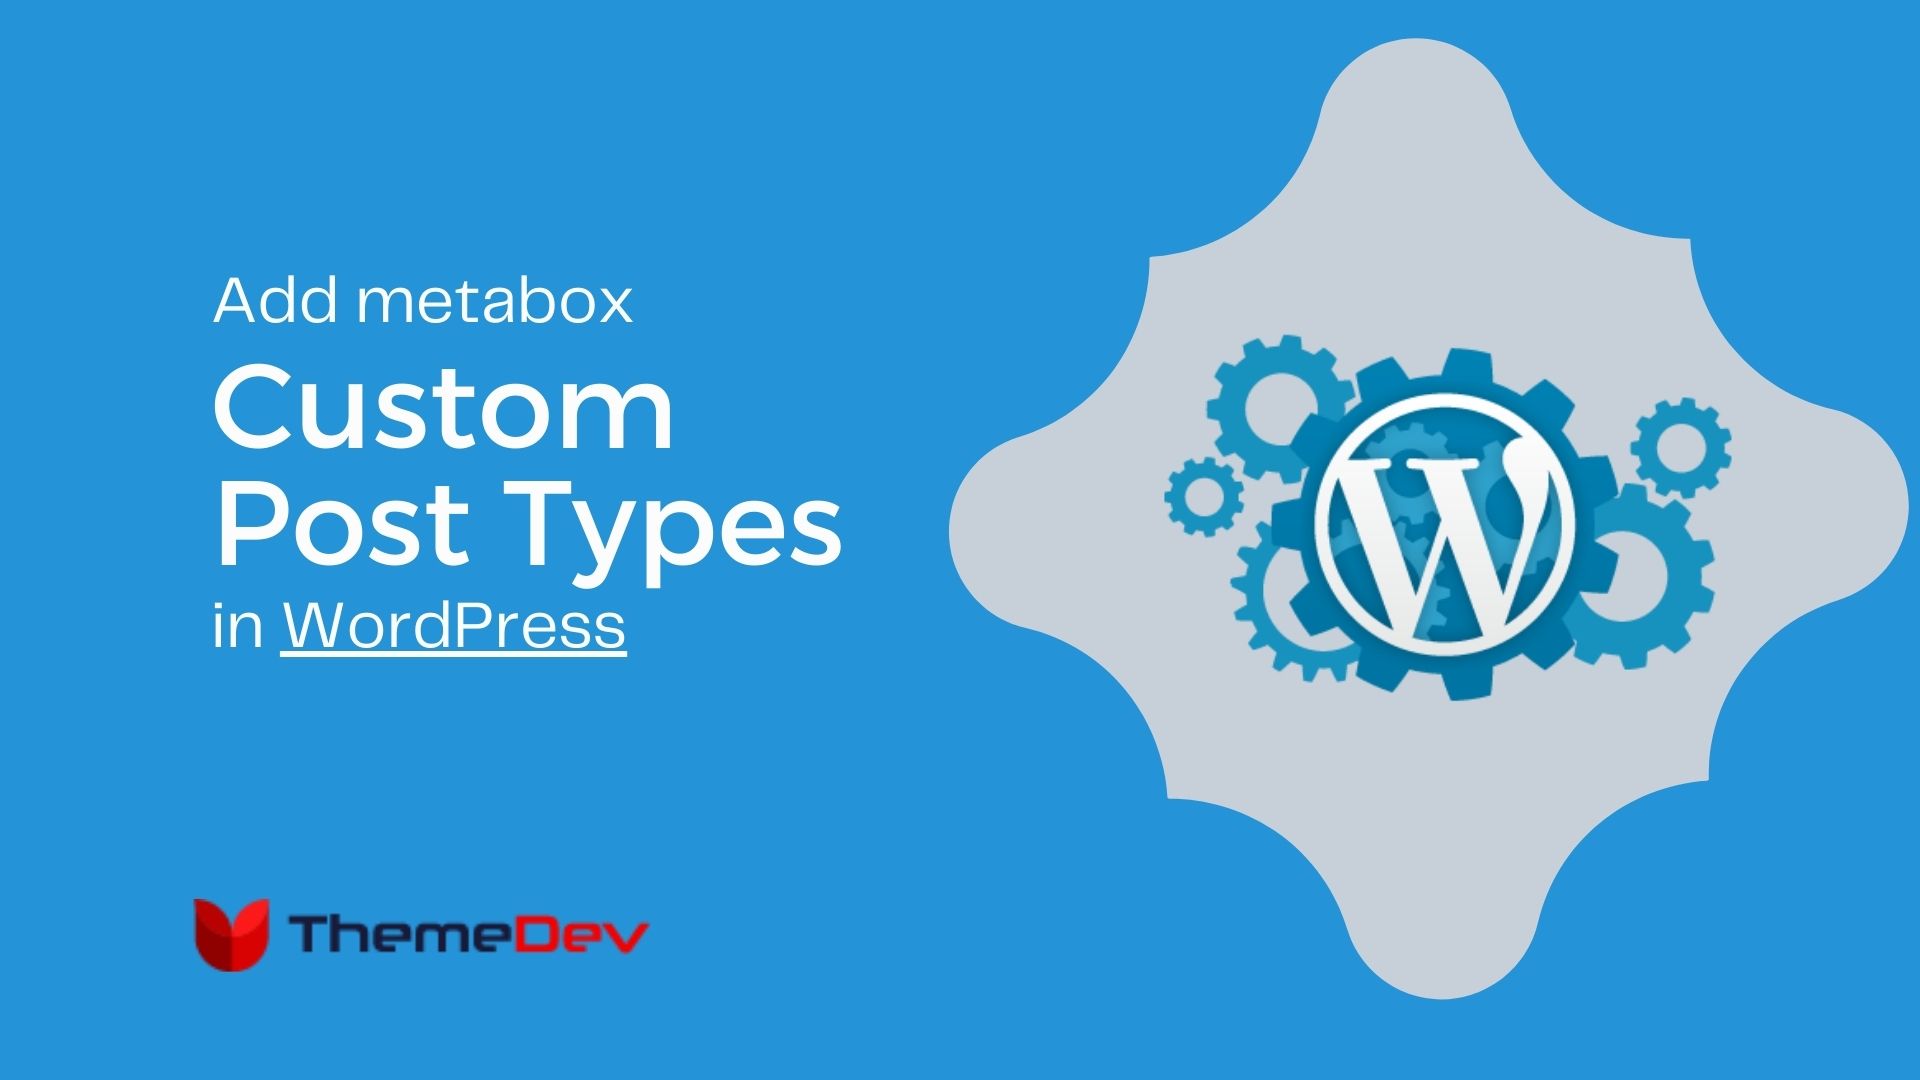 Add Meta Boxes to Post Types in WordPress